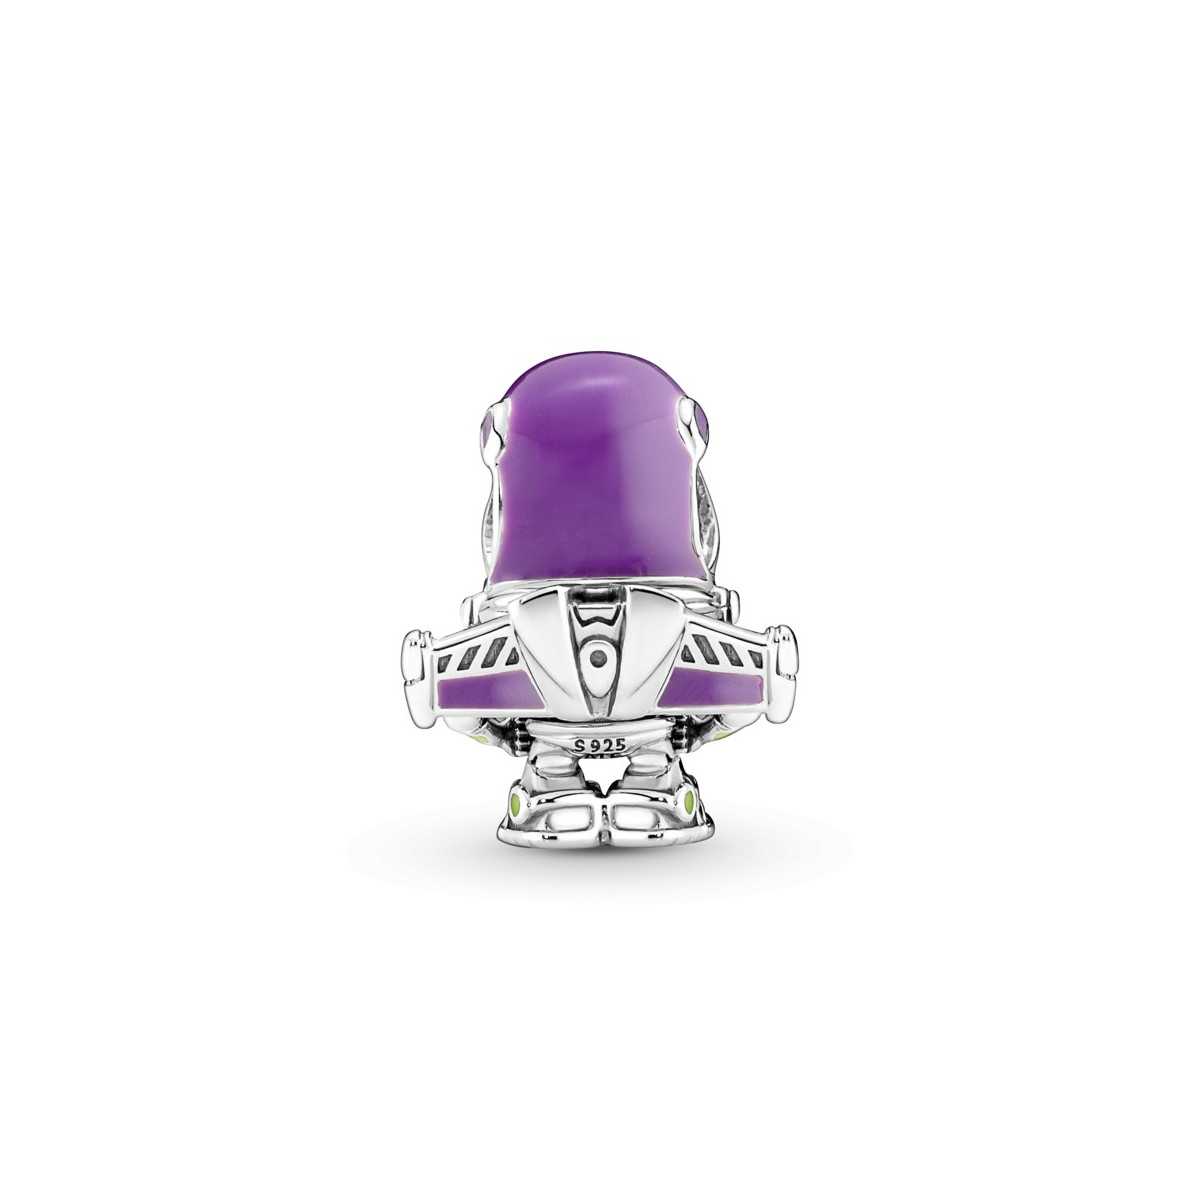 Charm Pandora Buzz Lightyear de Pixar 792024C01